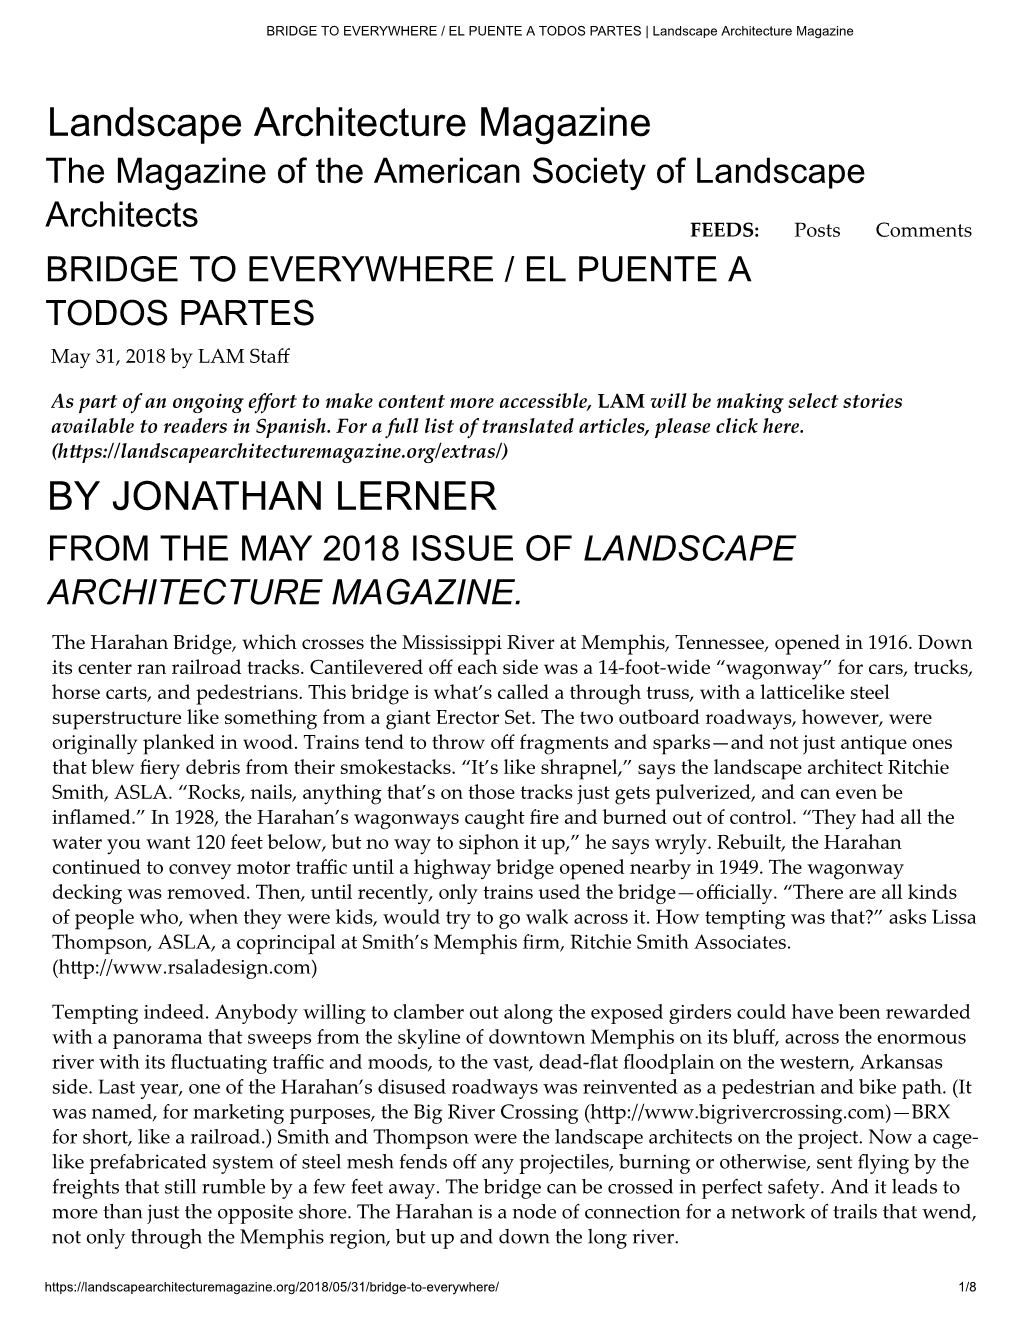 Landscape Architecture Magazine by JONATHAN LERNER